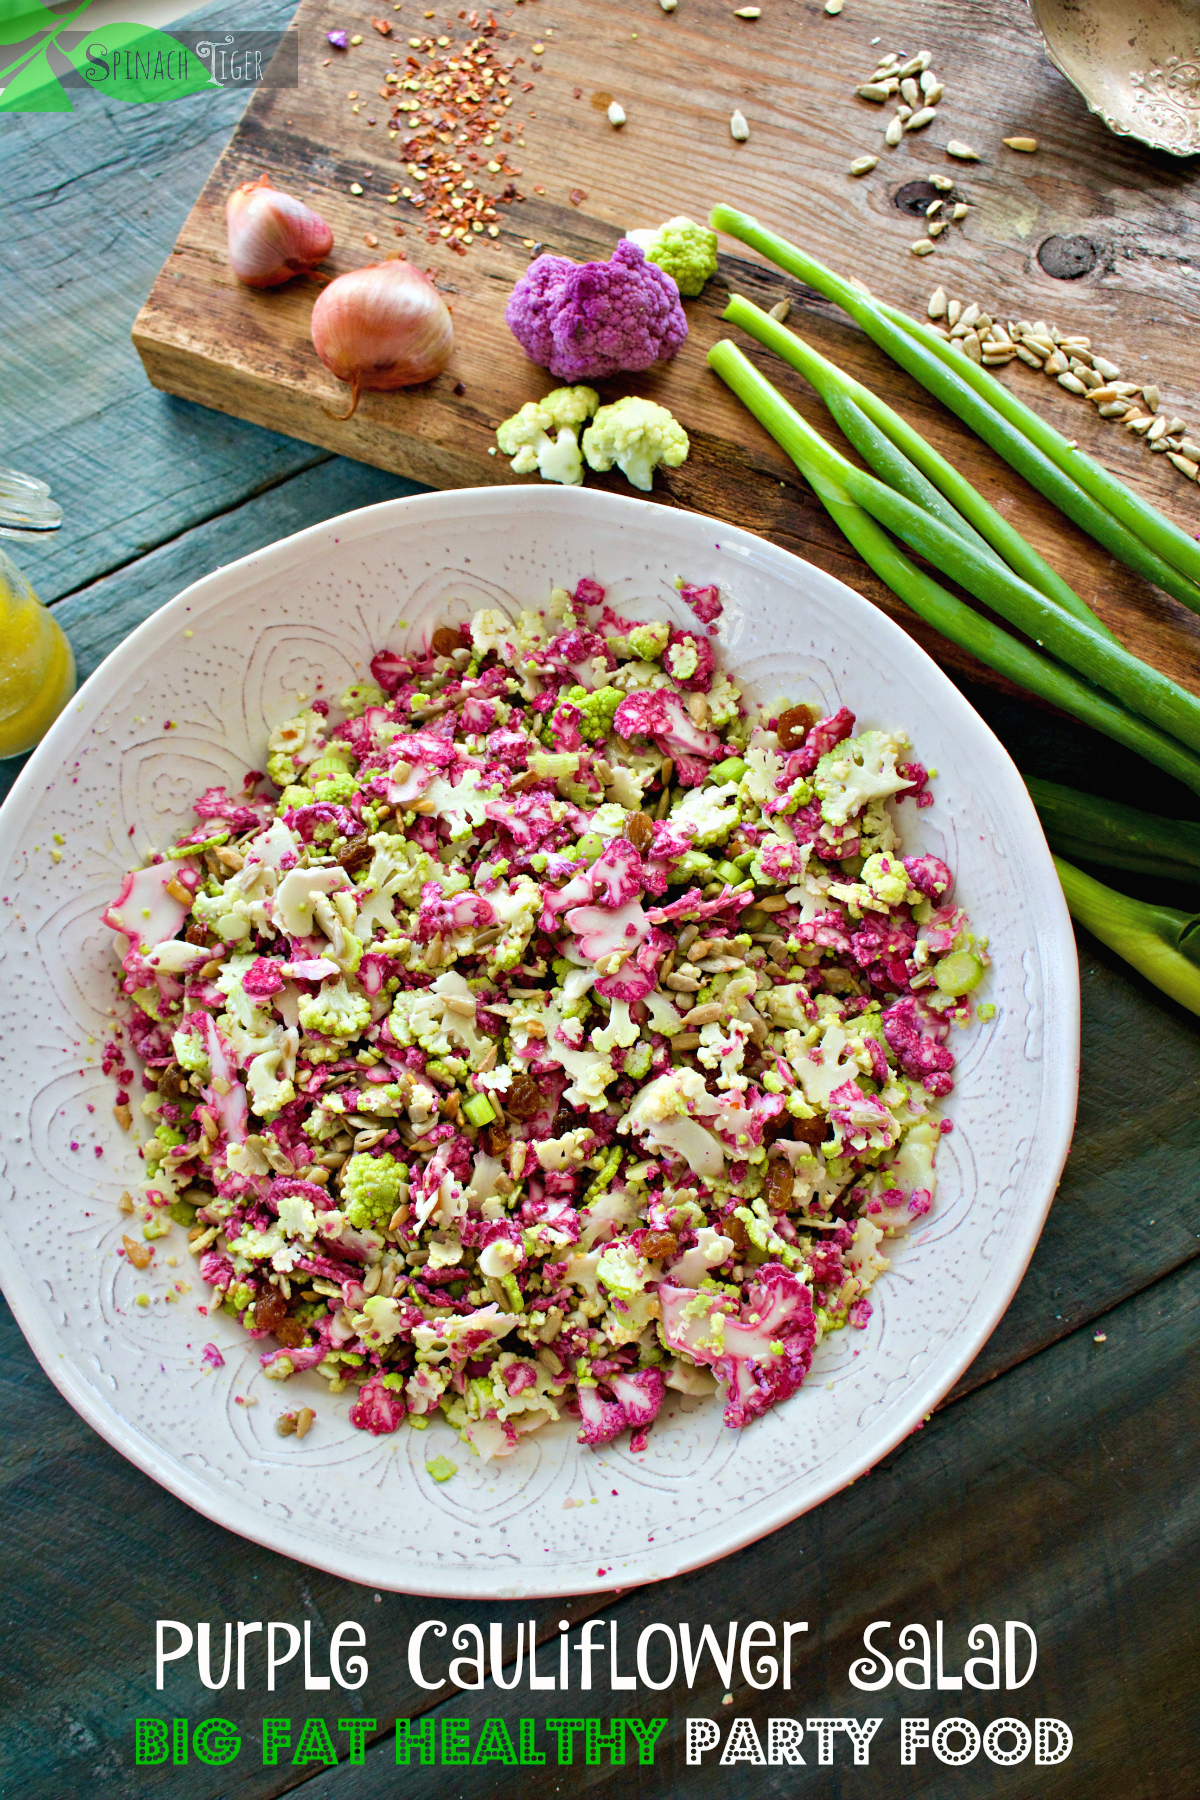 Purple Cauliflower Salad, Walnut Vinaigrette from Spinach Tiger